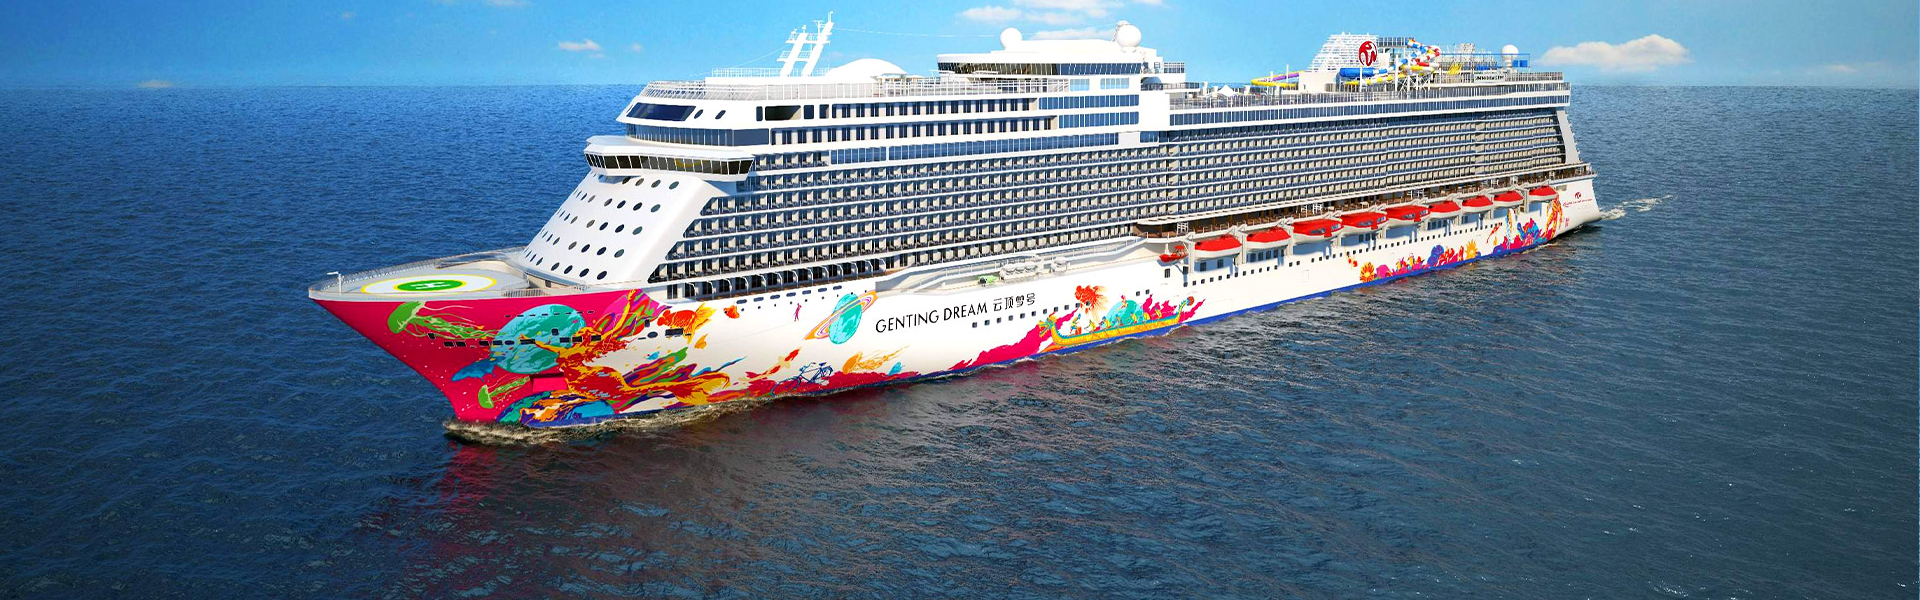 Cruceros Exclusivos Resort World Cruises 